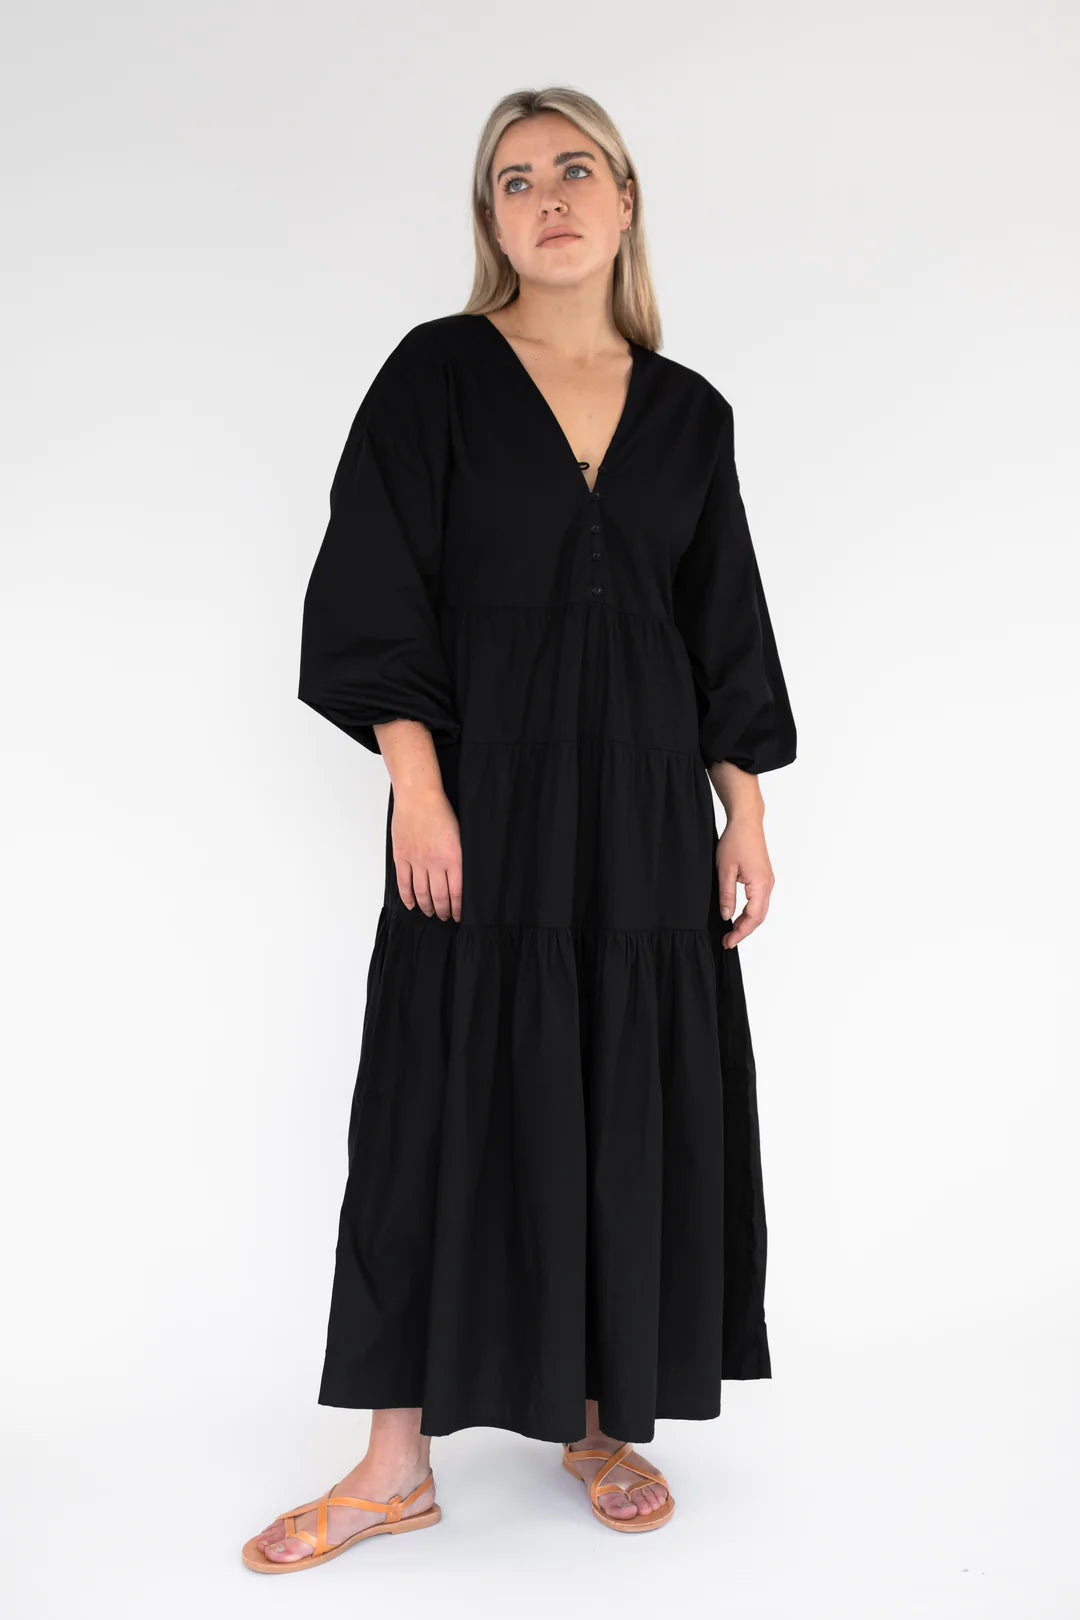 BEIGED // Penelope Dress BLACK